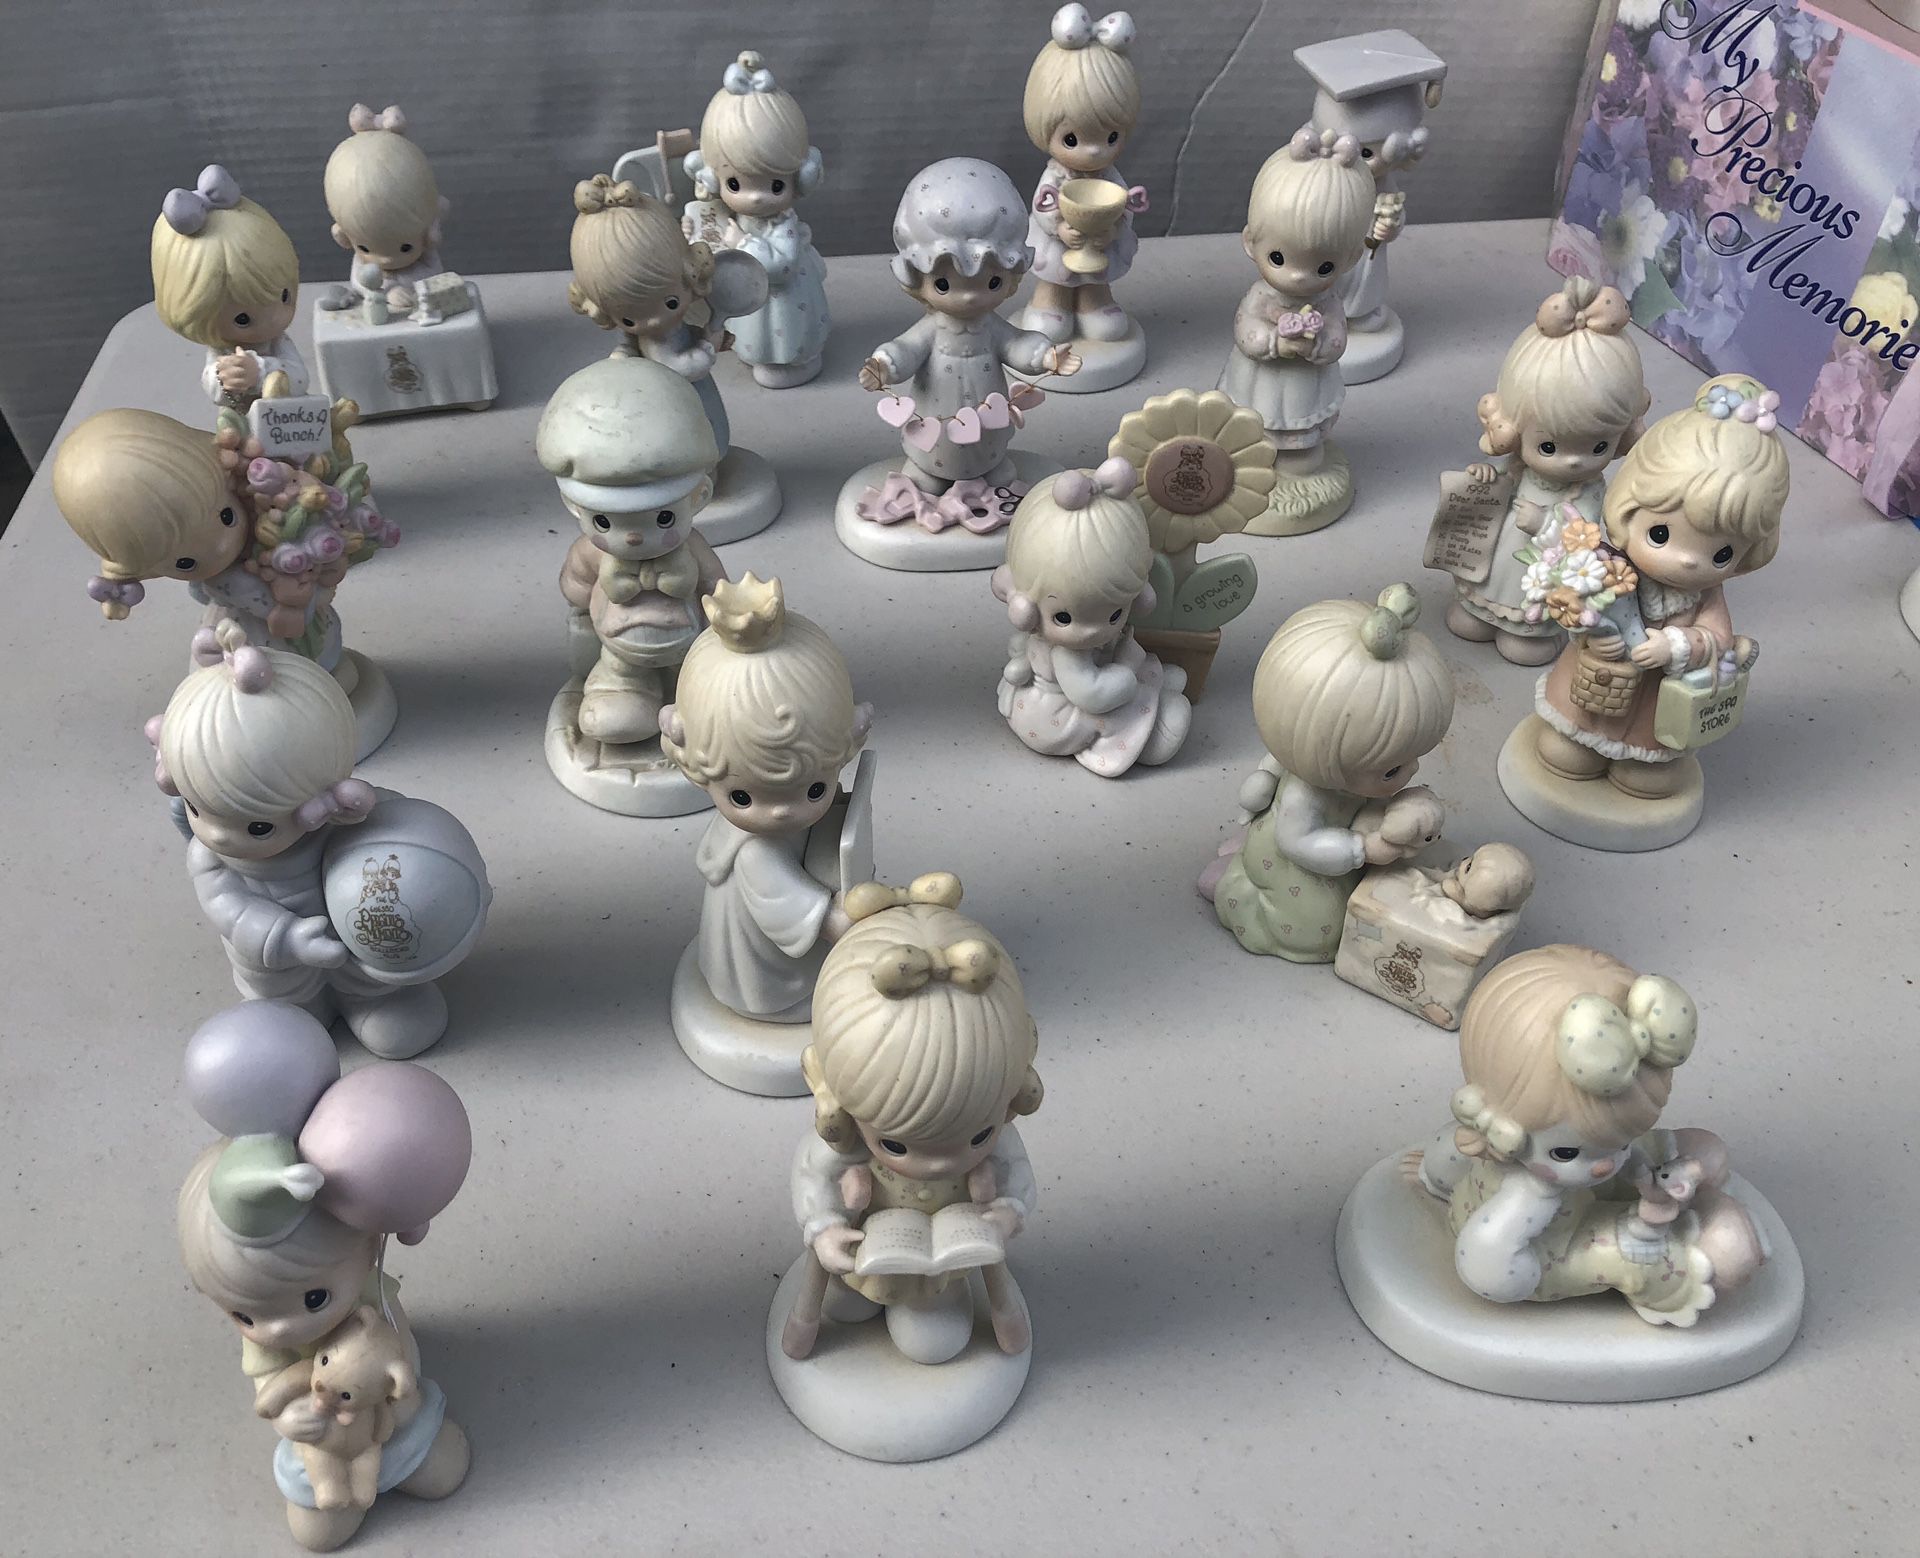 Precious moments porcelain figurines $6 each